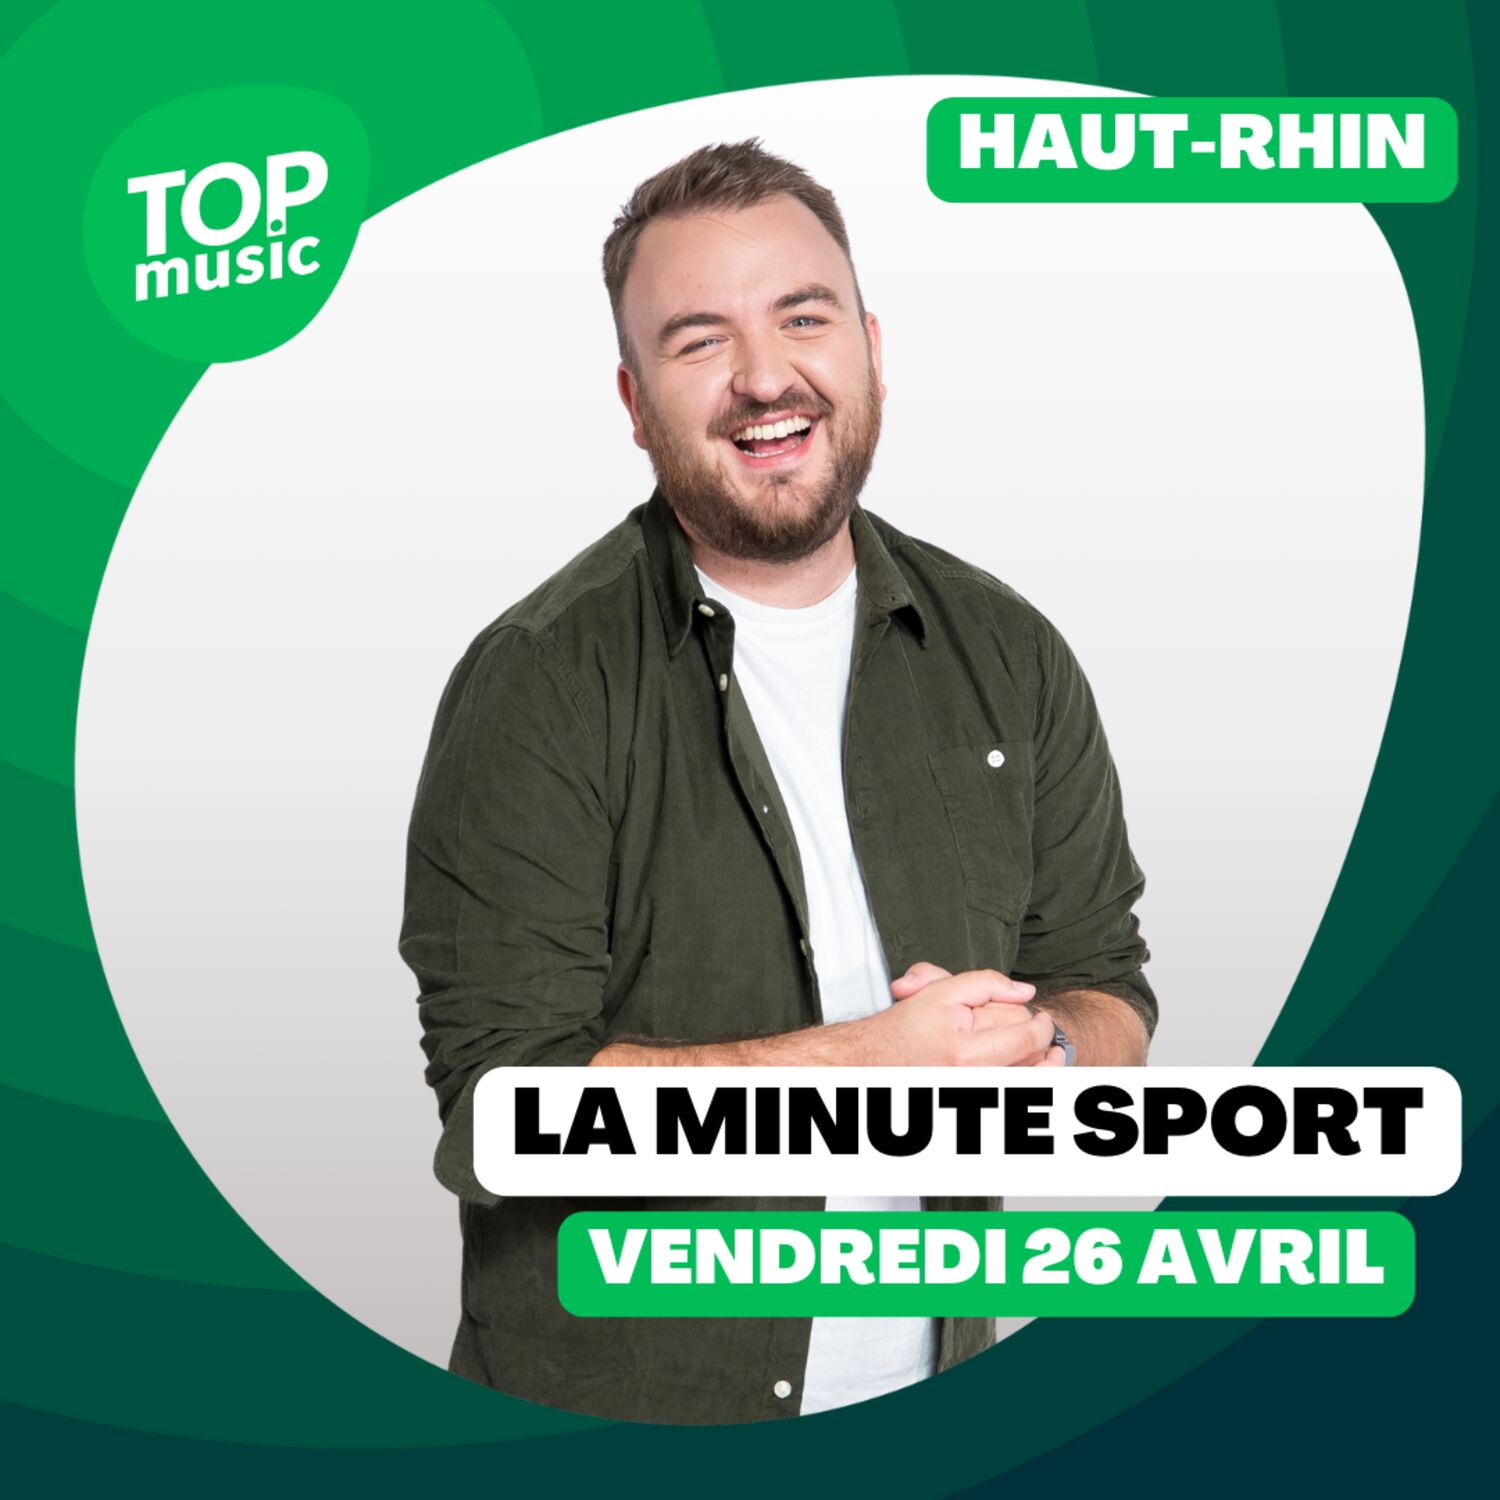 La Minute sport du Haut-Rhin - vendredi 26 avril